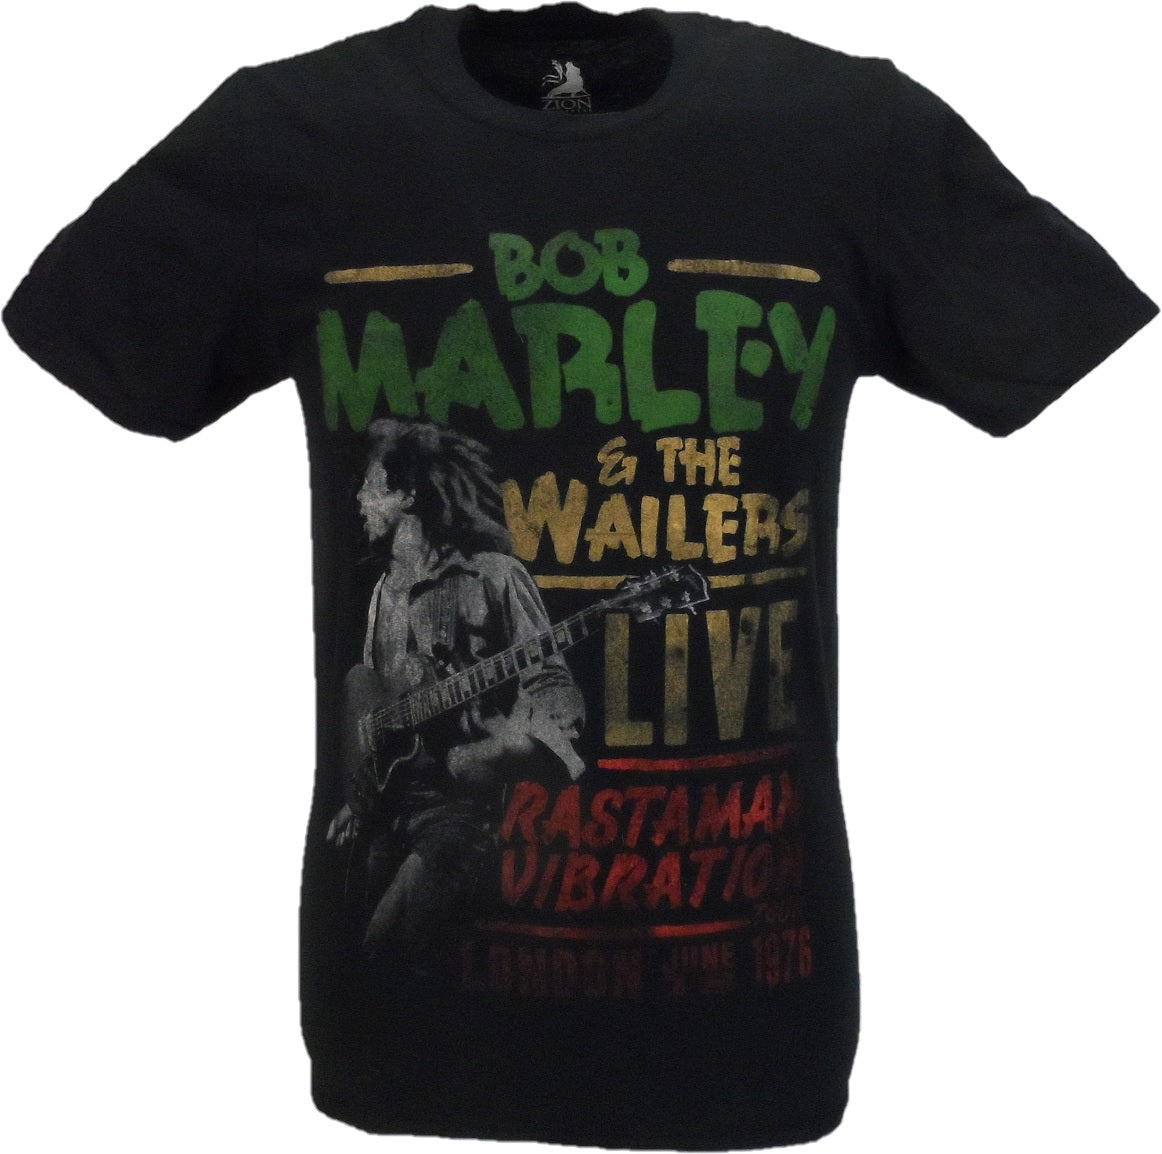 Mens Official Licensed Bob Marley Rastaman Vibration Tour 1976 T Shirt